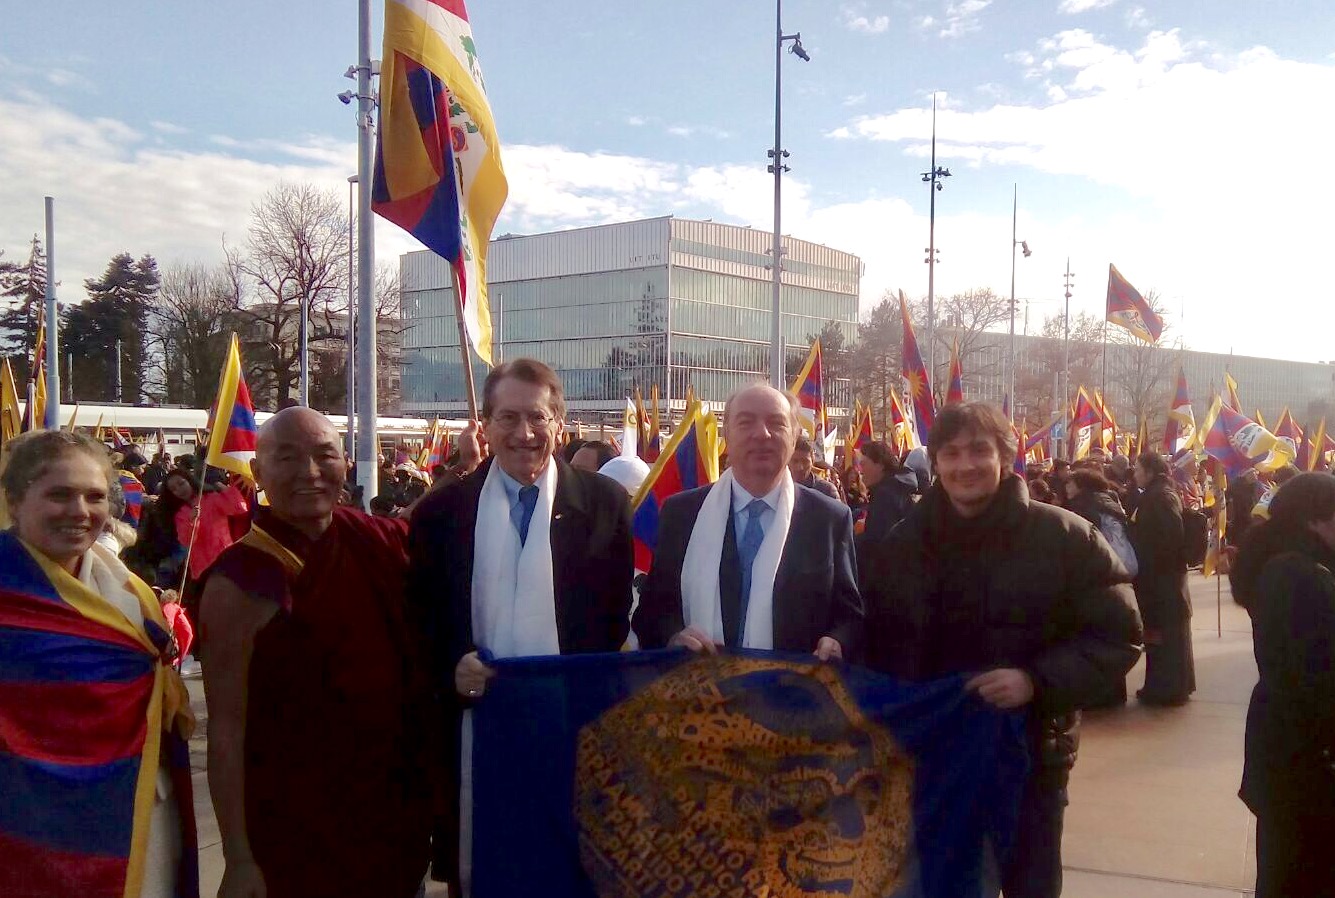 Commemoration in Geneva: “Europe Stands With Tibet”